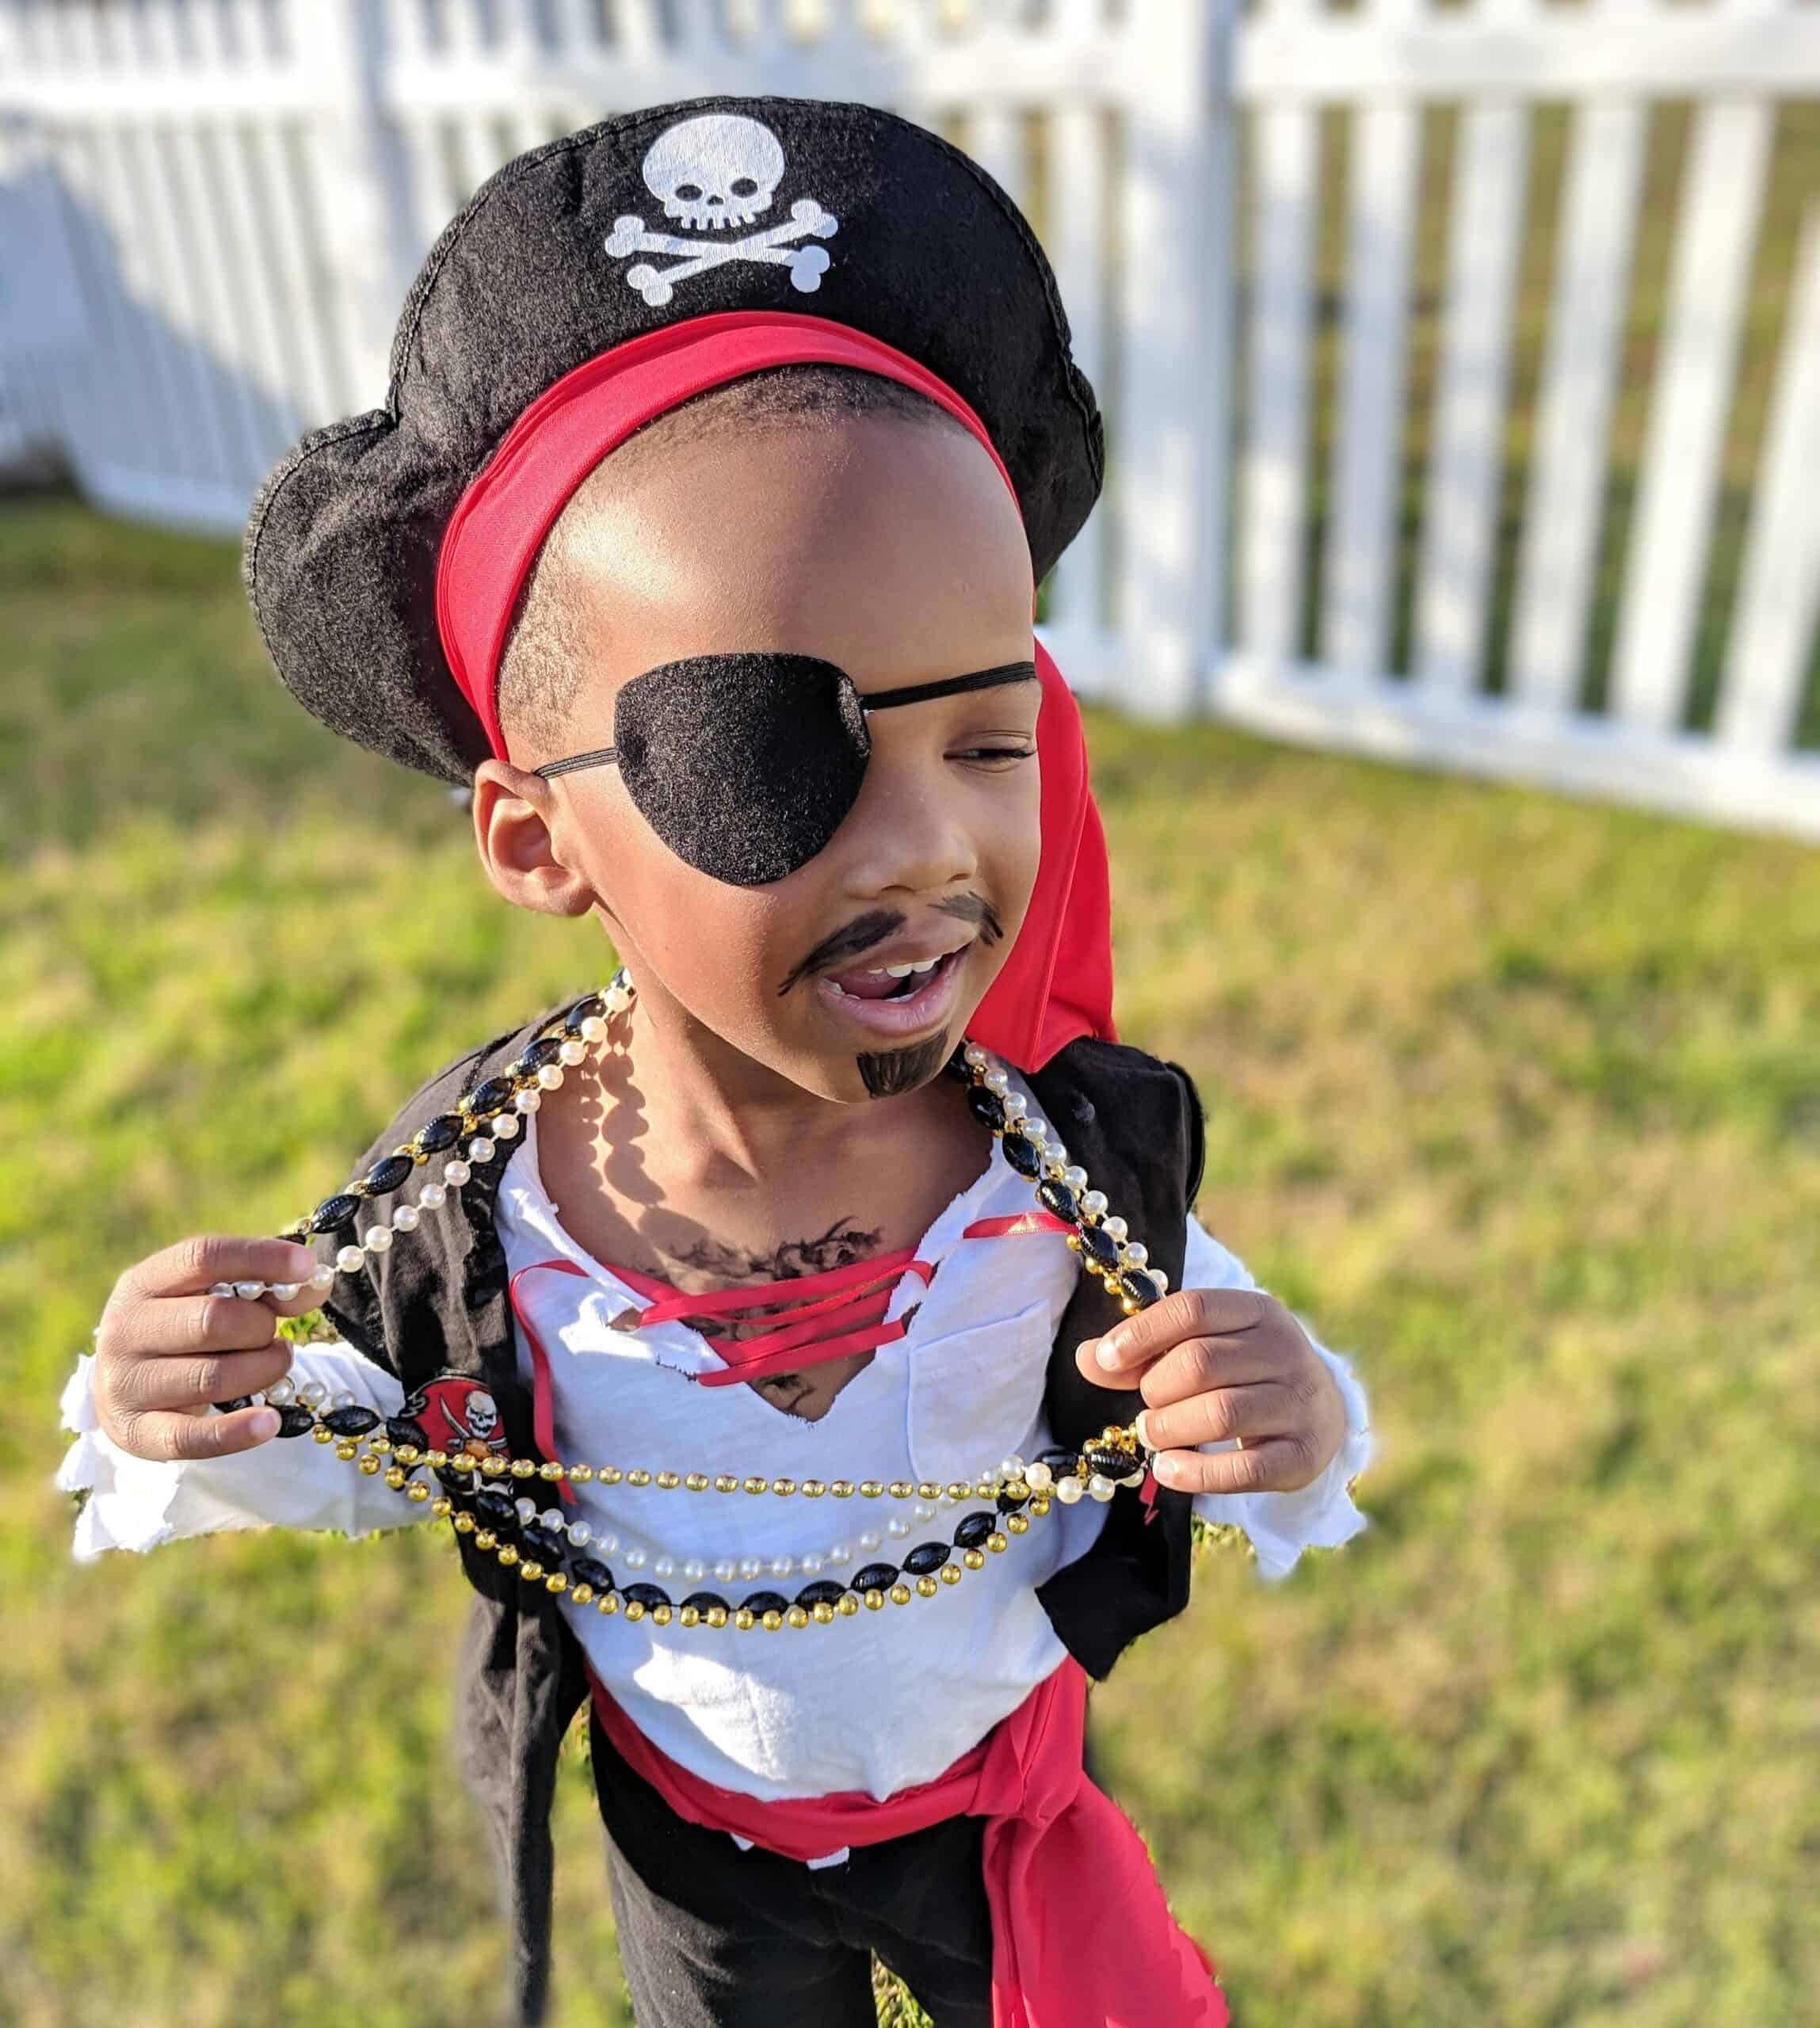 DIY Pirate Costume by Karimah Henry